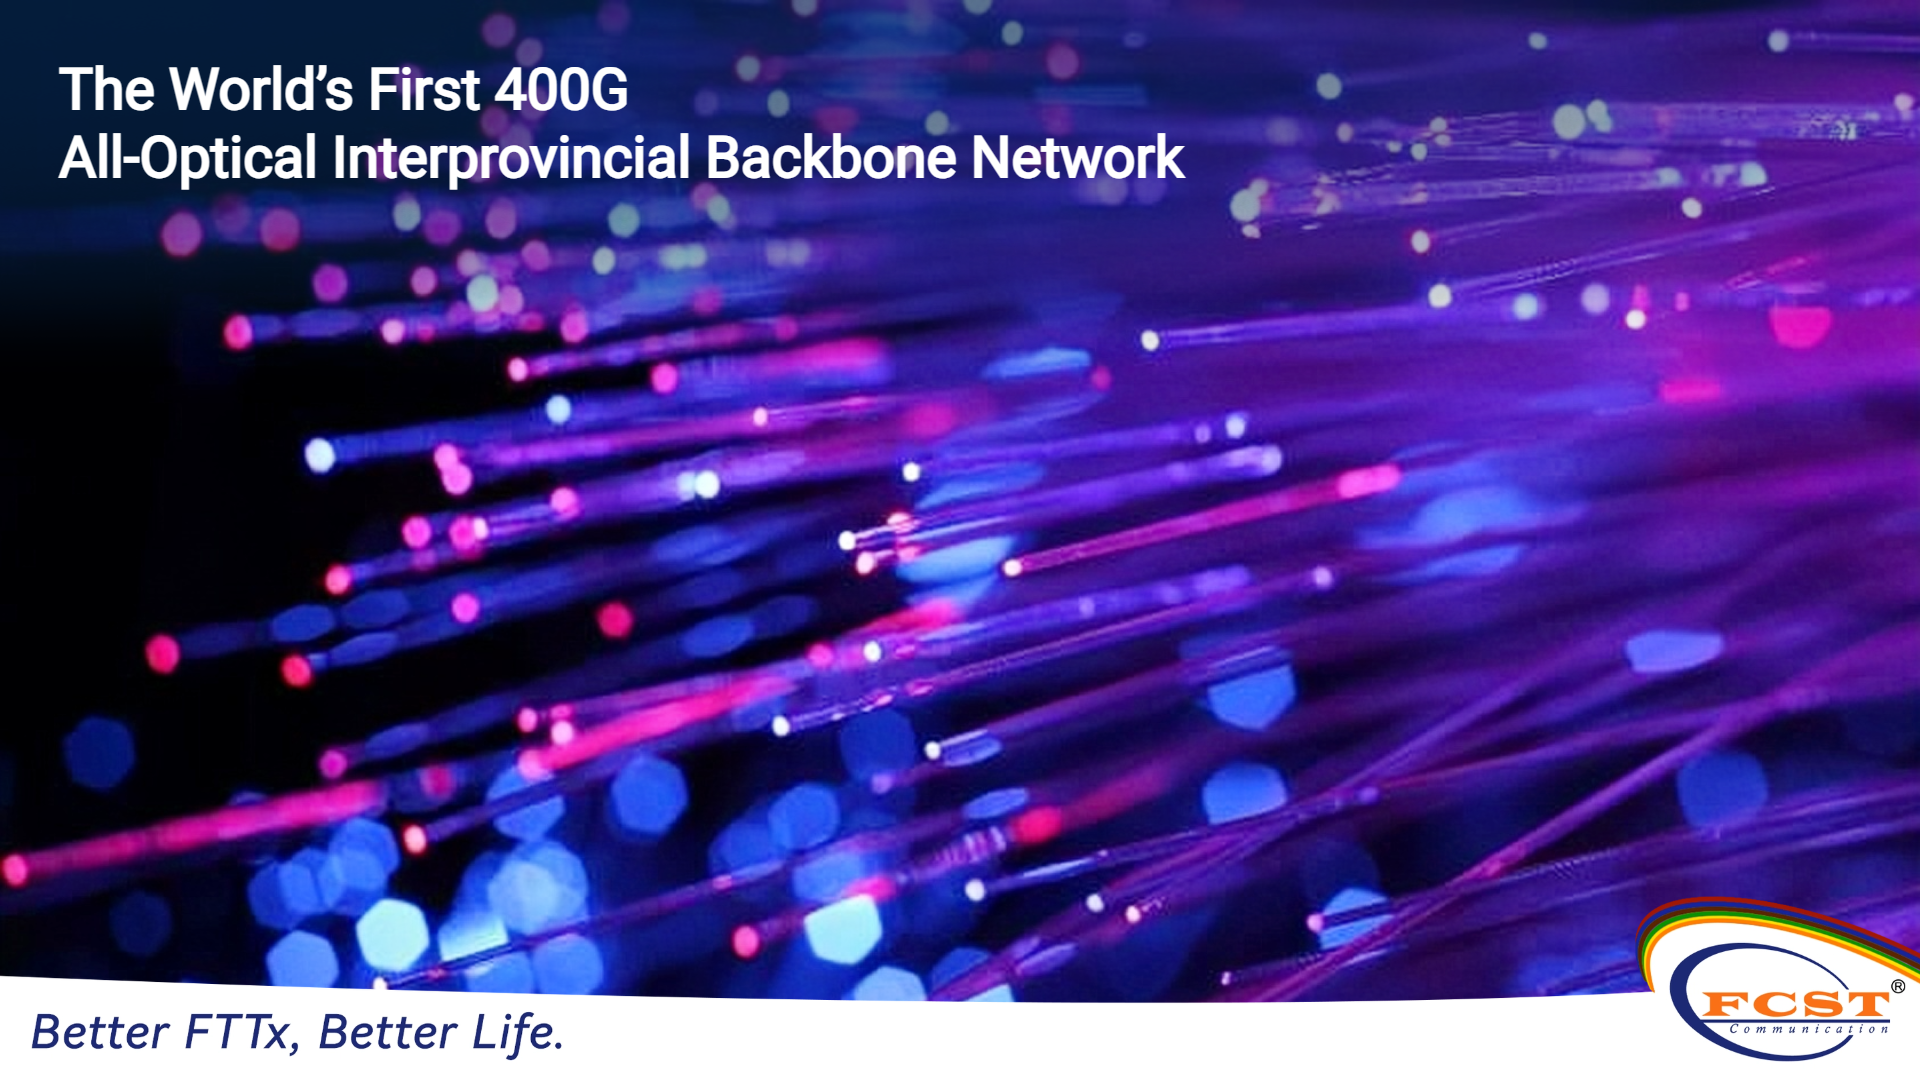 The World's First 400G All-Optical Interprovincial Backbone Network